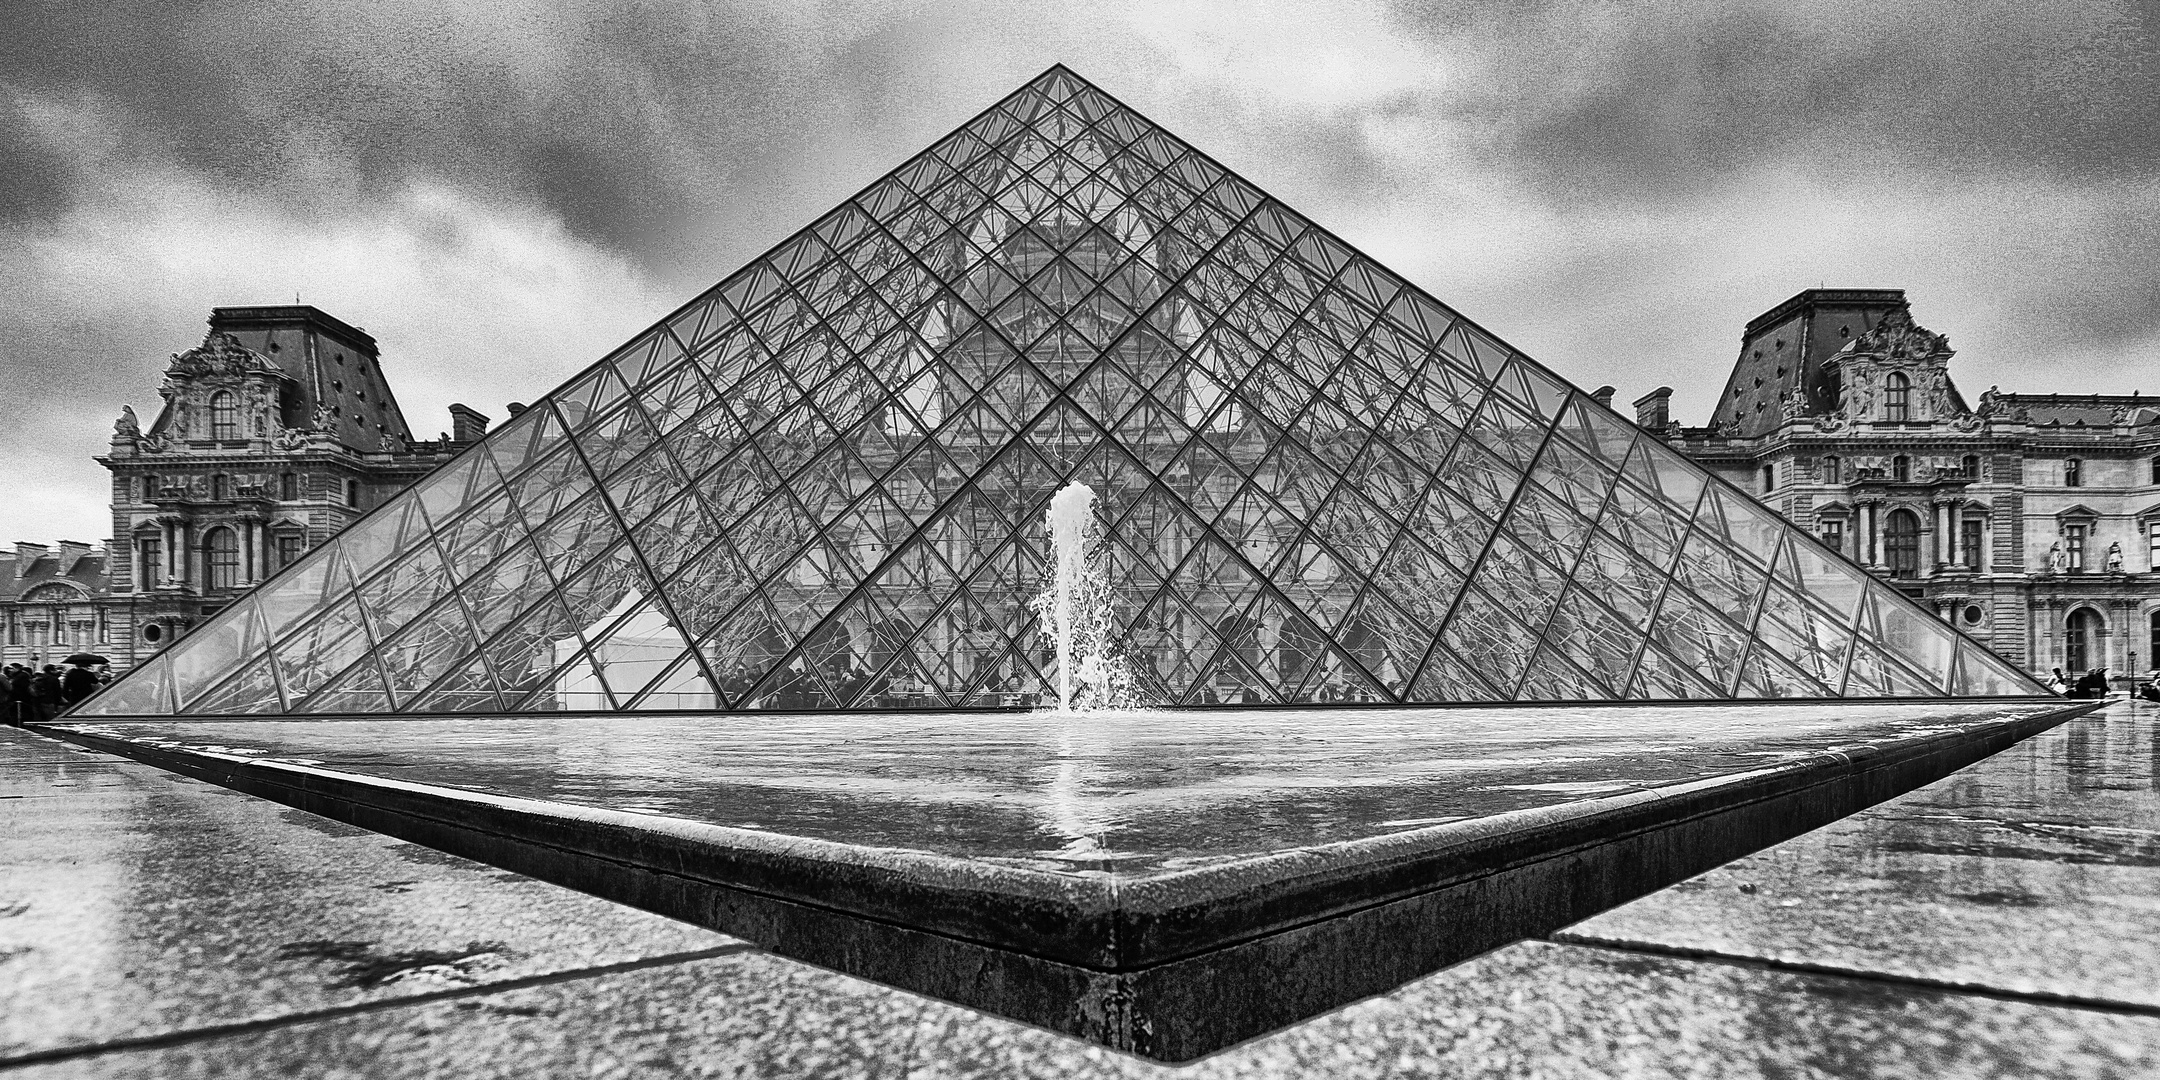 Klassiker: Pyramide am Louvre